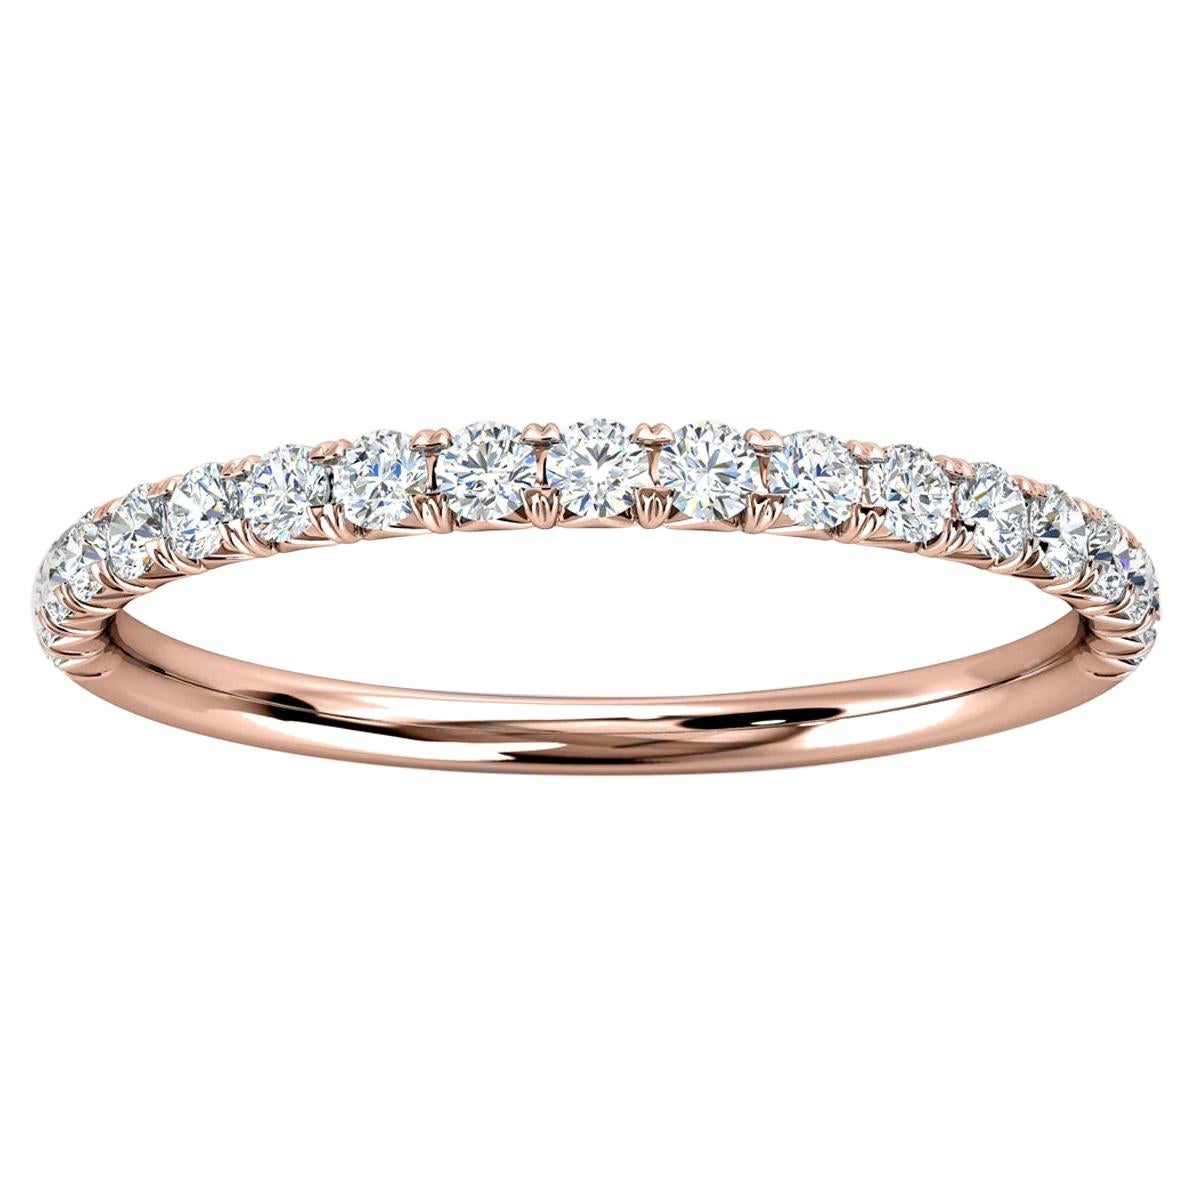 18k Rose Gold Voyage French Pave Diamond Ring '1/4 Ct. Tw'